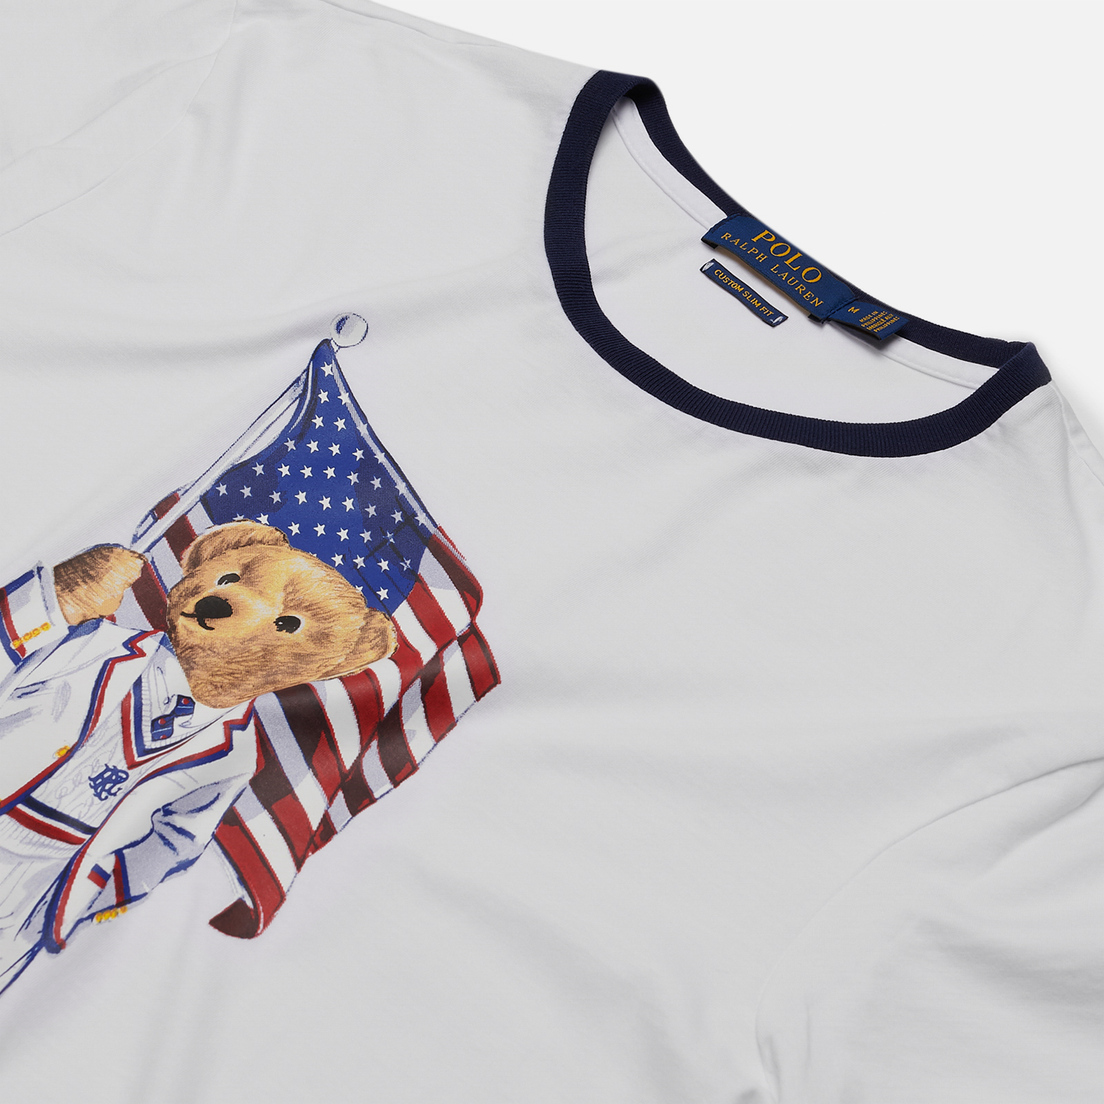 Polo Ralph Lauren Мужская футболка Polo Bear With American Flag